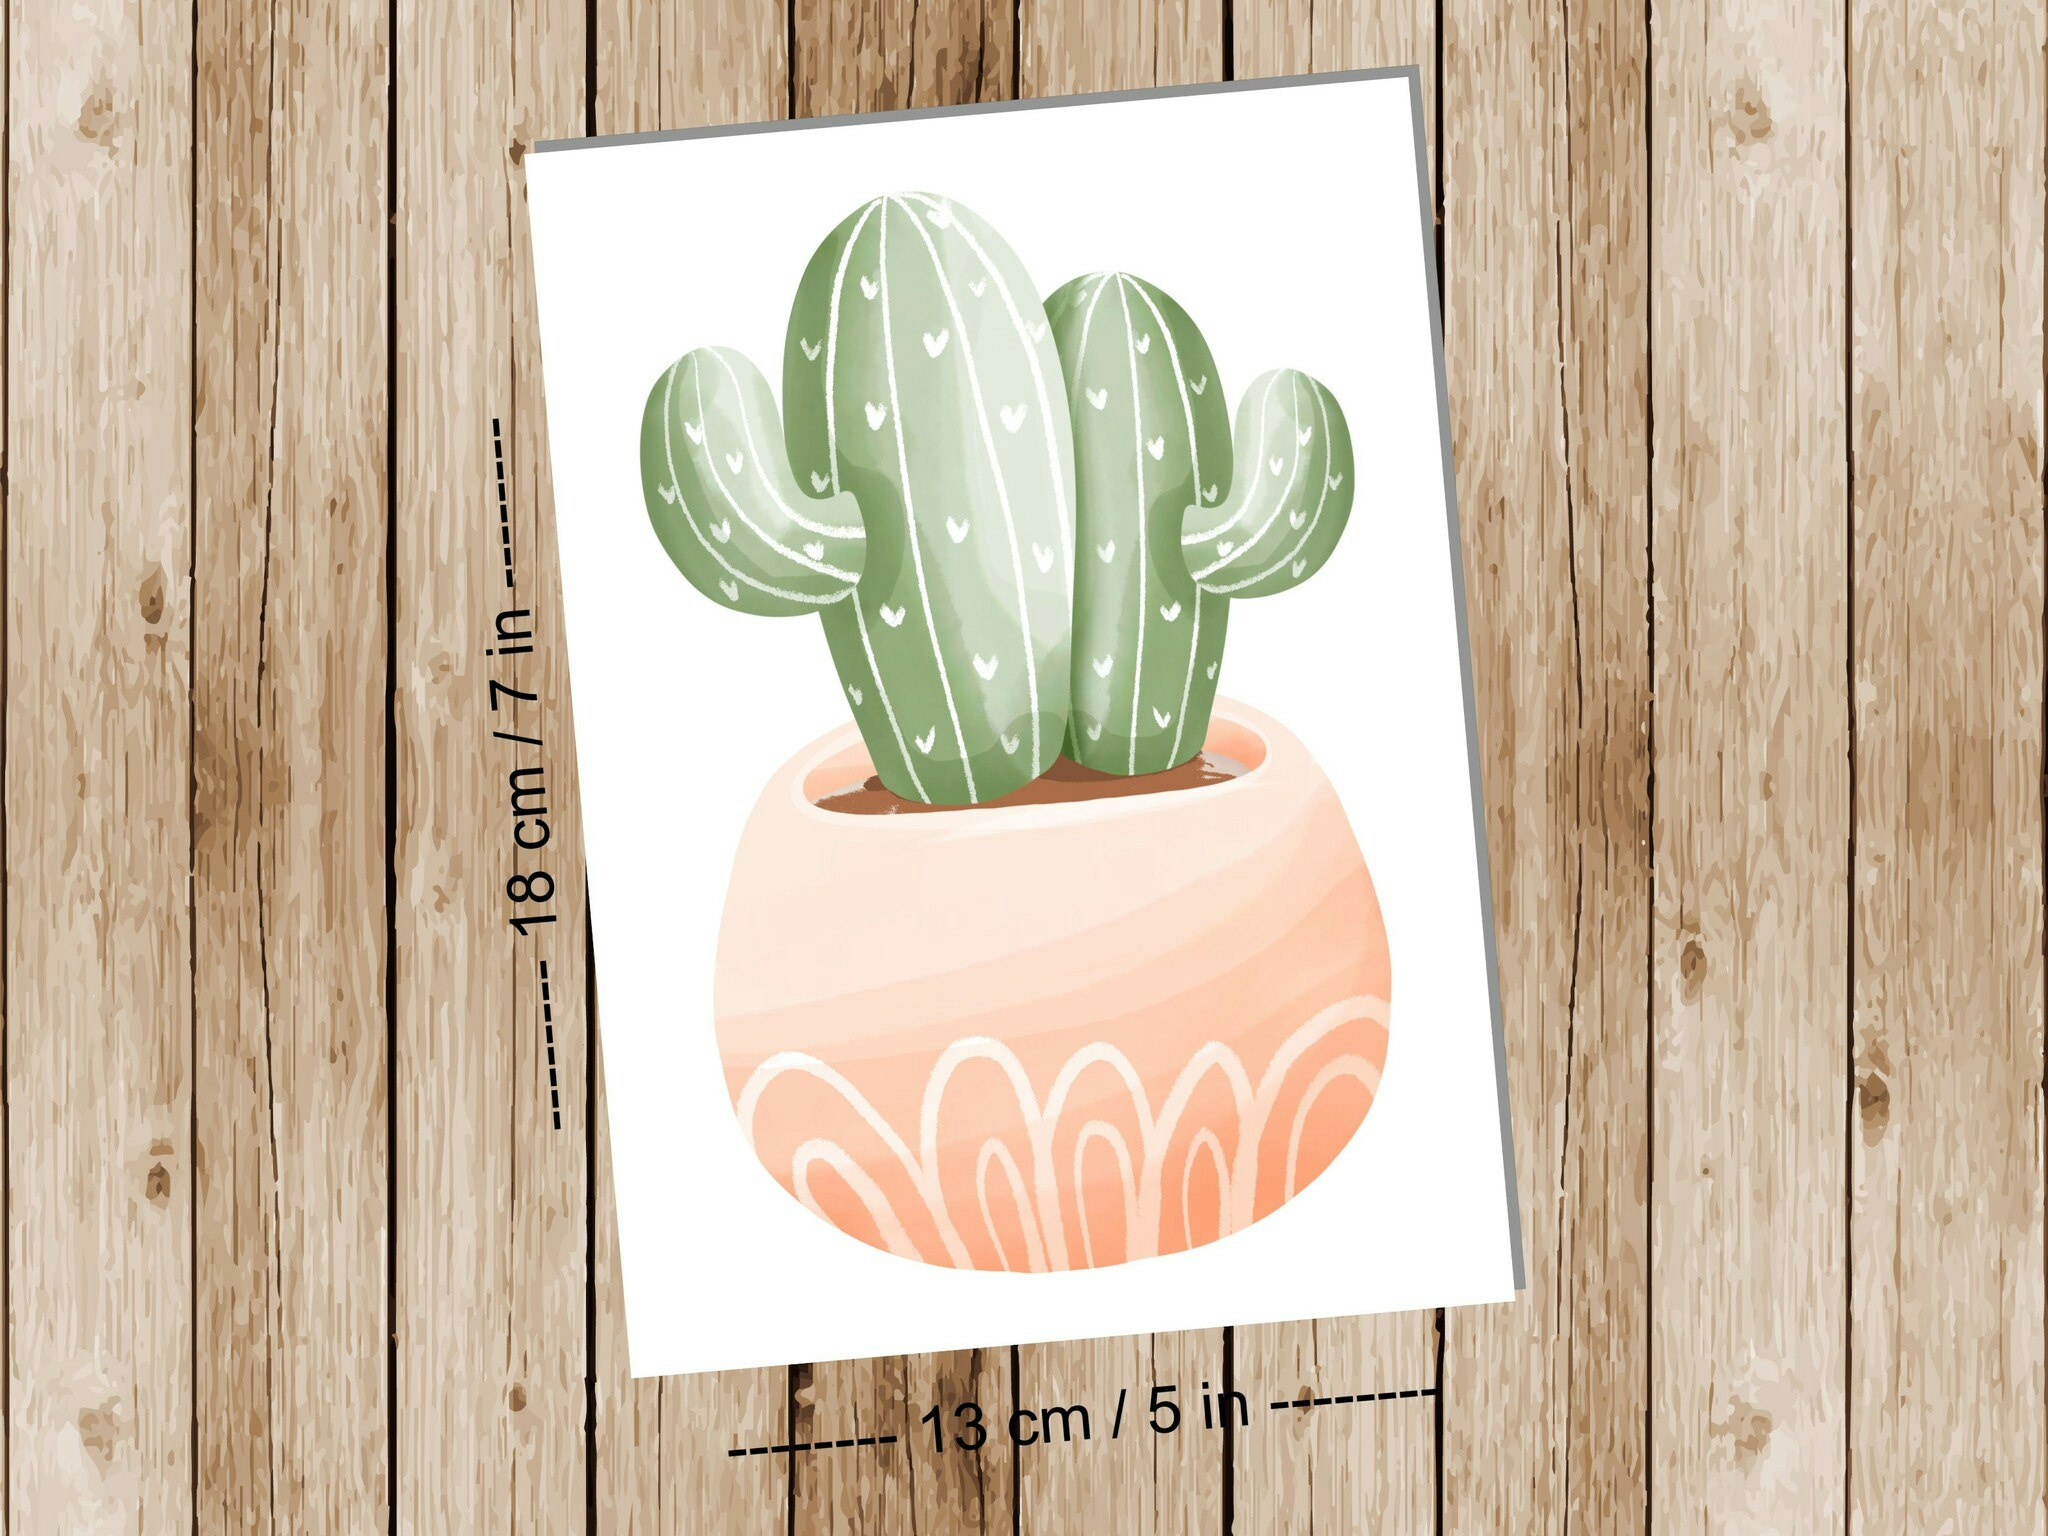 Cactus 1 - Art print